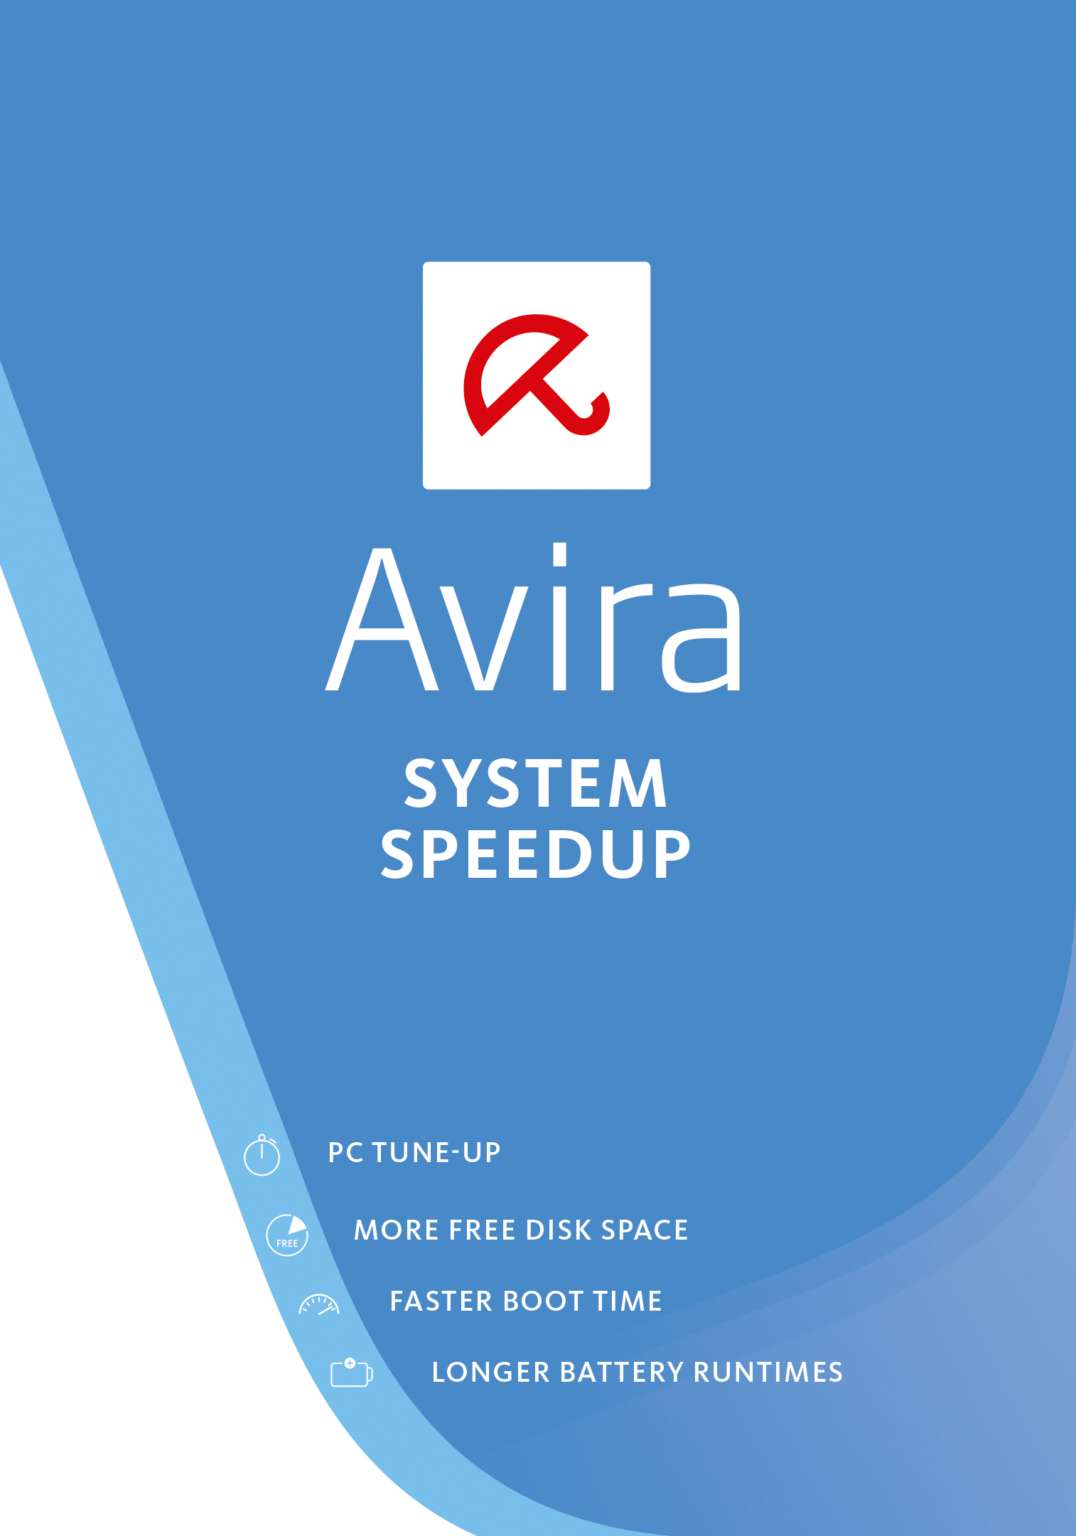 Avira System Speedup Pro 6.26.0.18 instal the new for ios